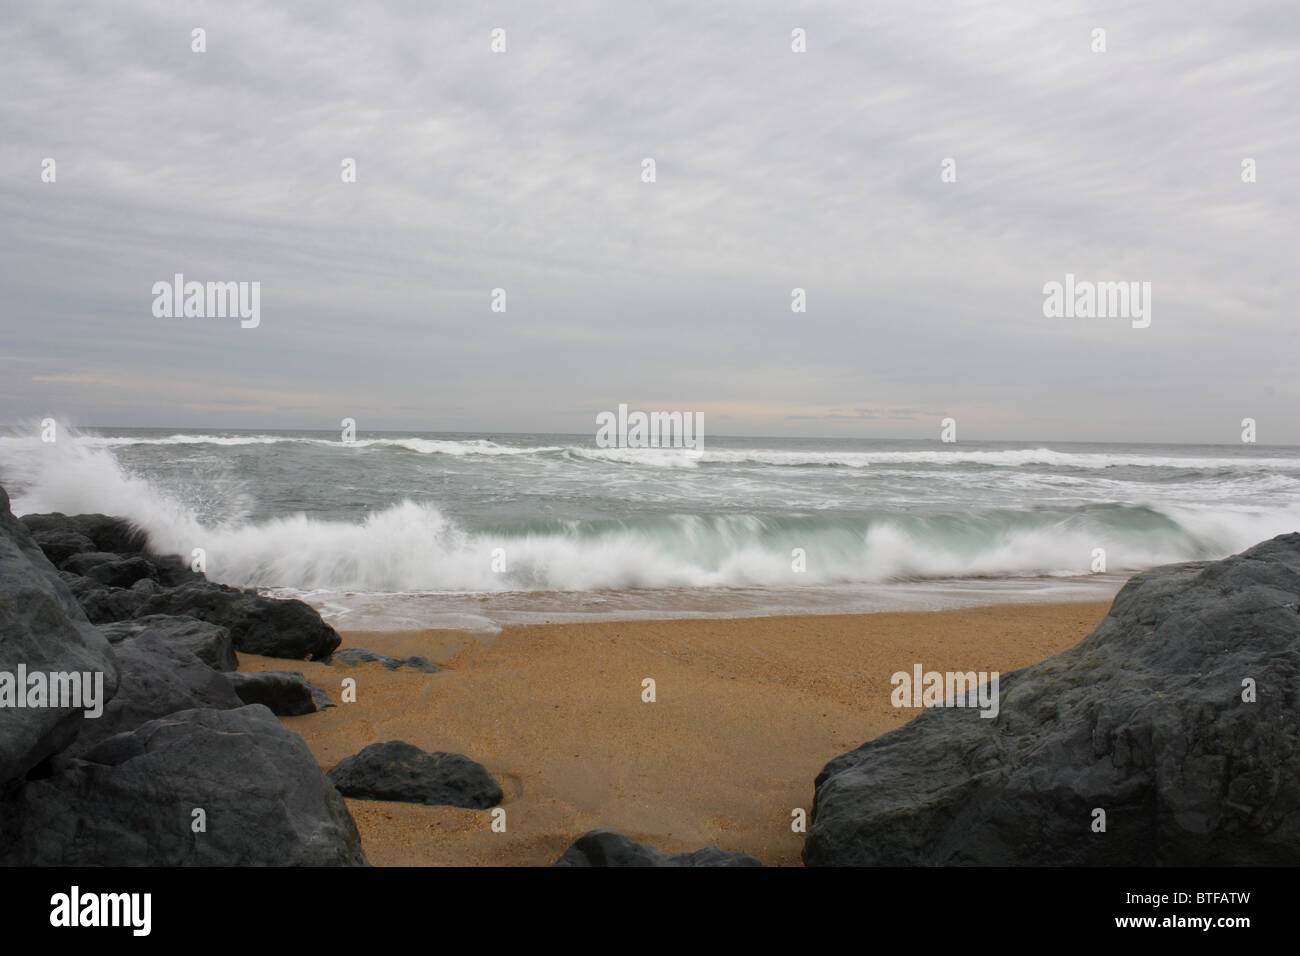 Seascape with rocks on the beach, La Madrague beach, Anglet, France Stock Photo